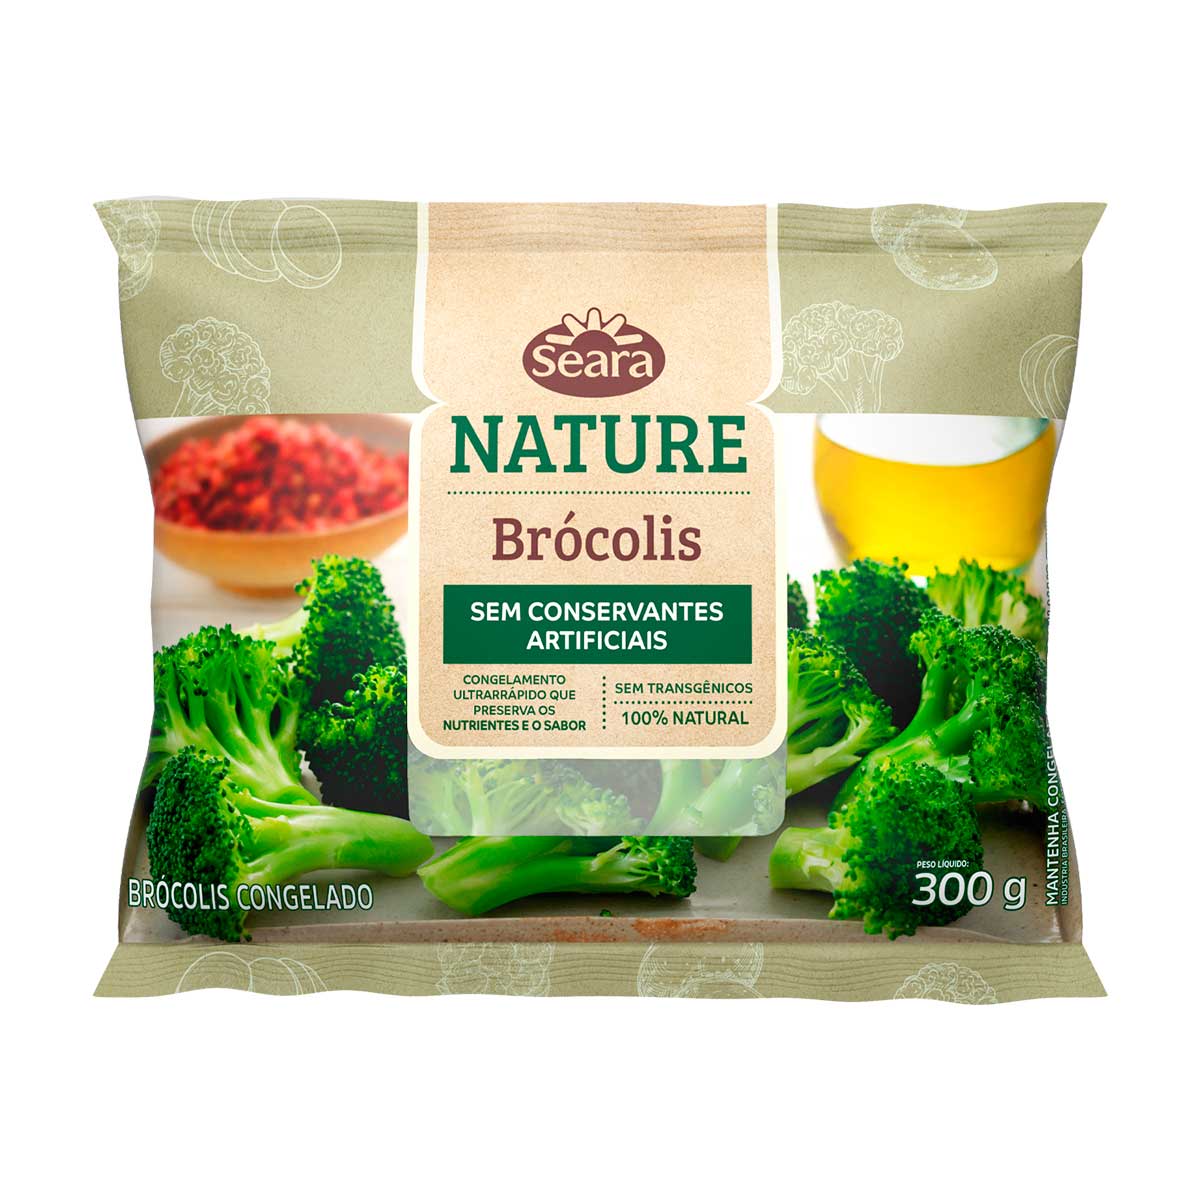 brocolis-congelado-seara-florete-300-g-1.jpg